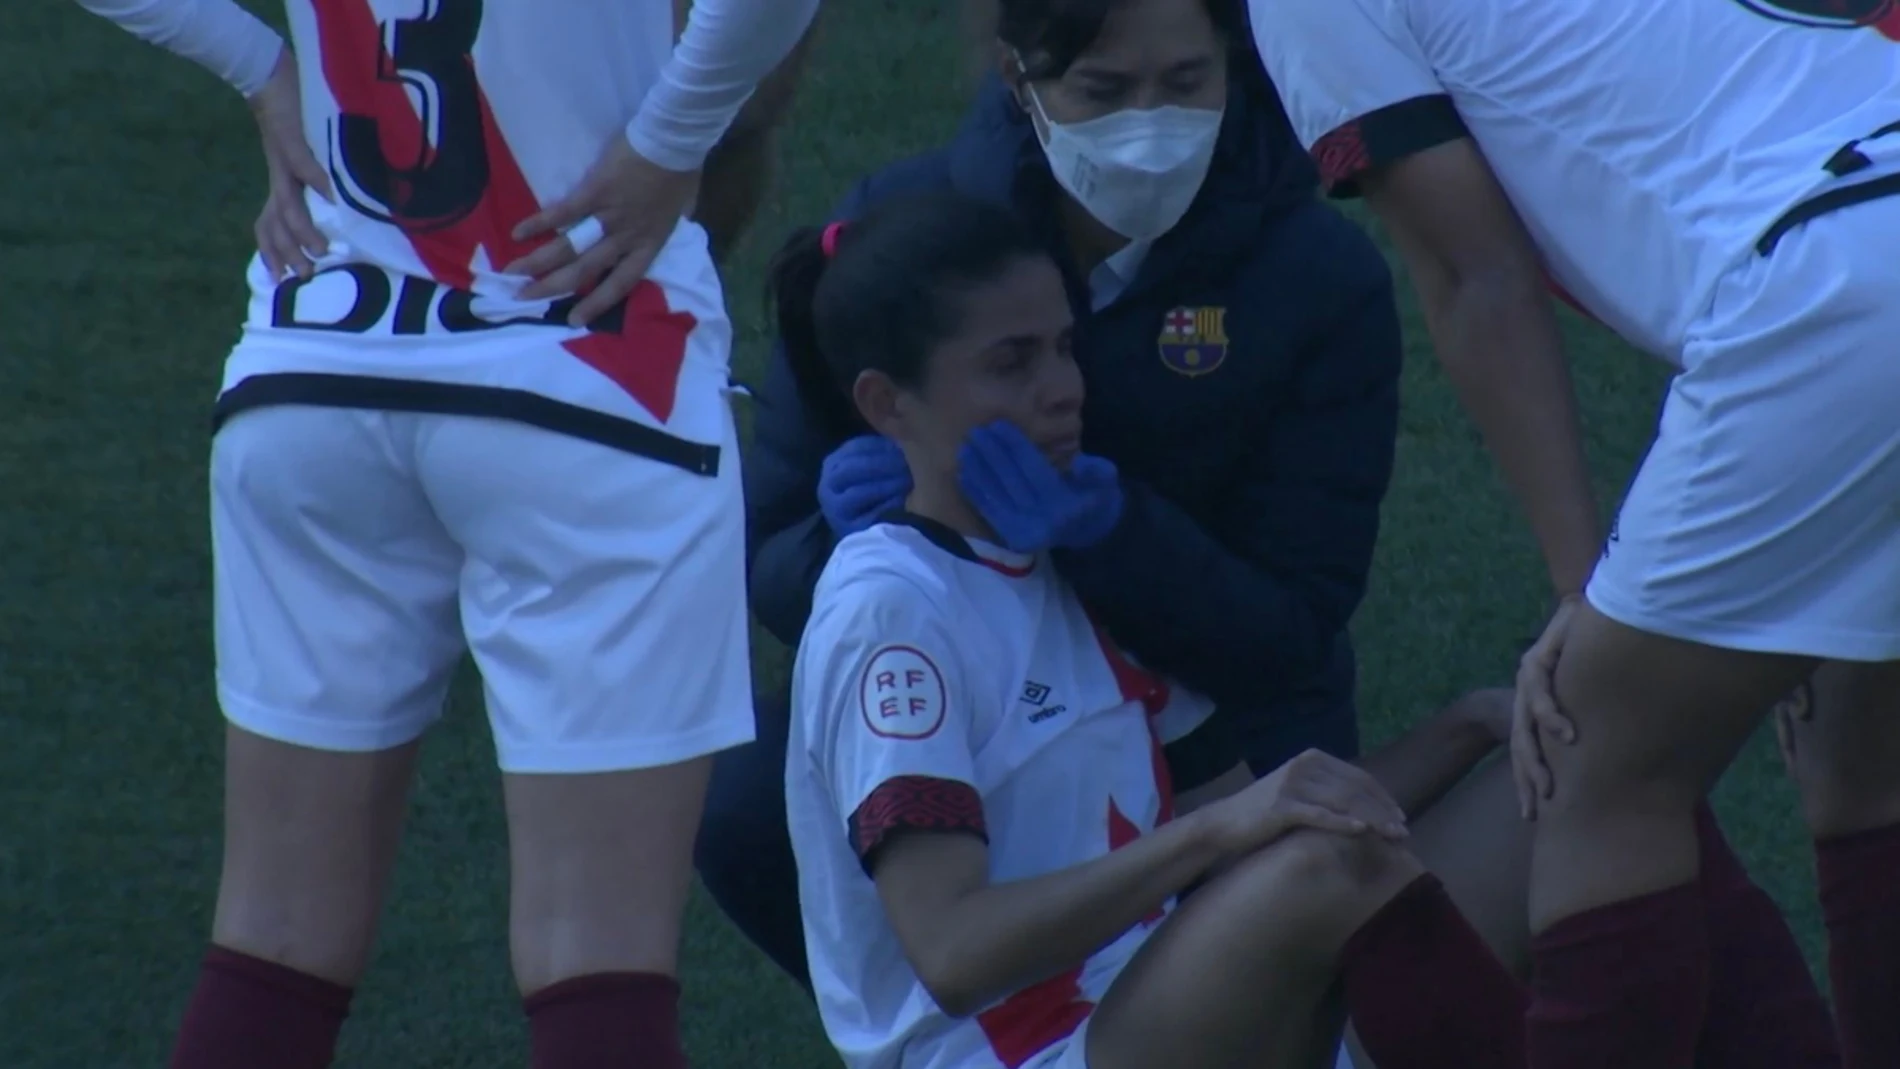 La médica del Barça atiende a una jugadora del Rayo